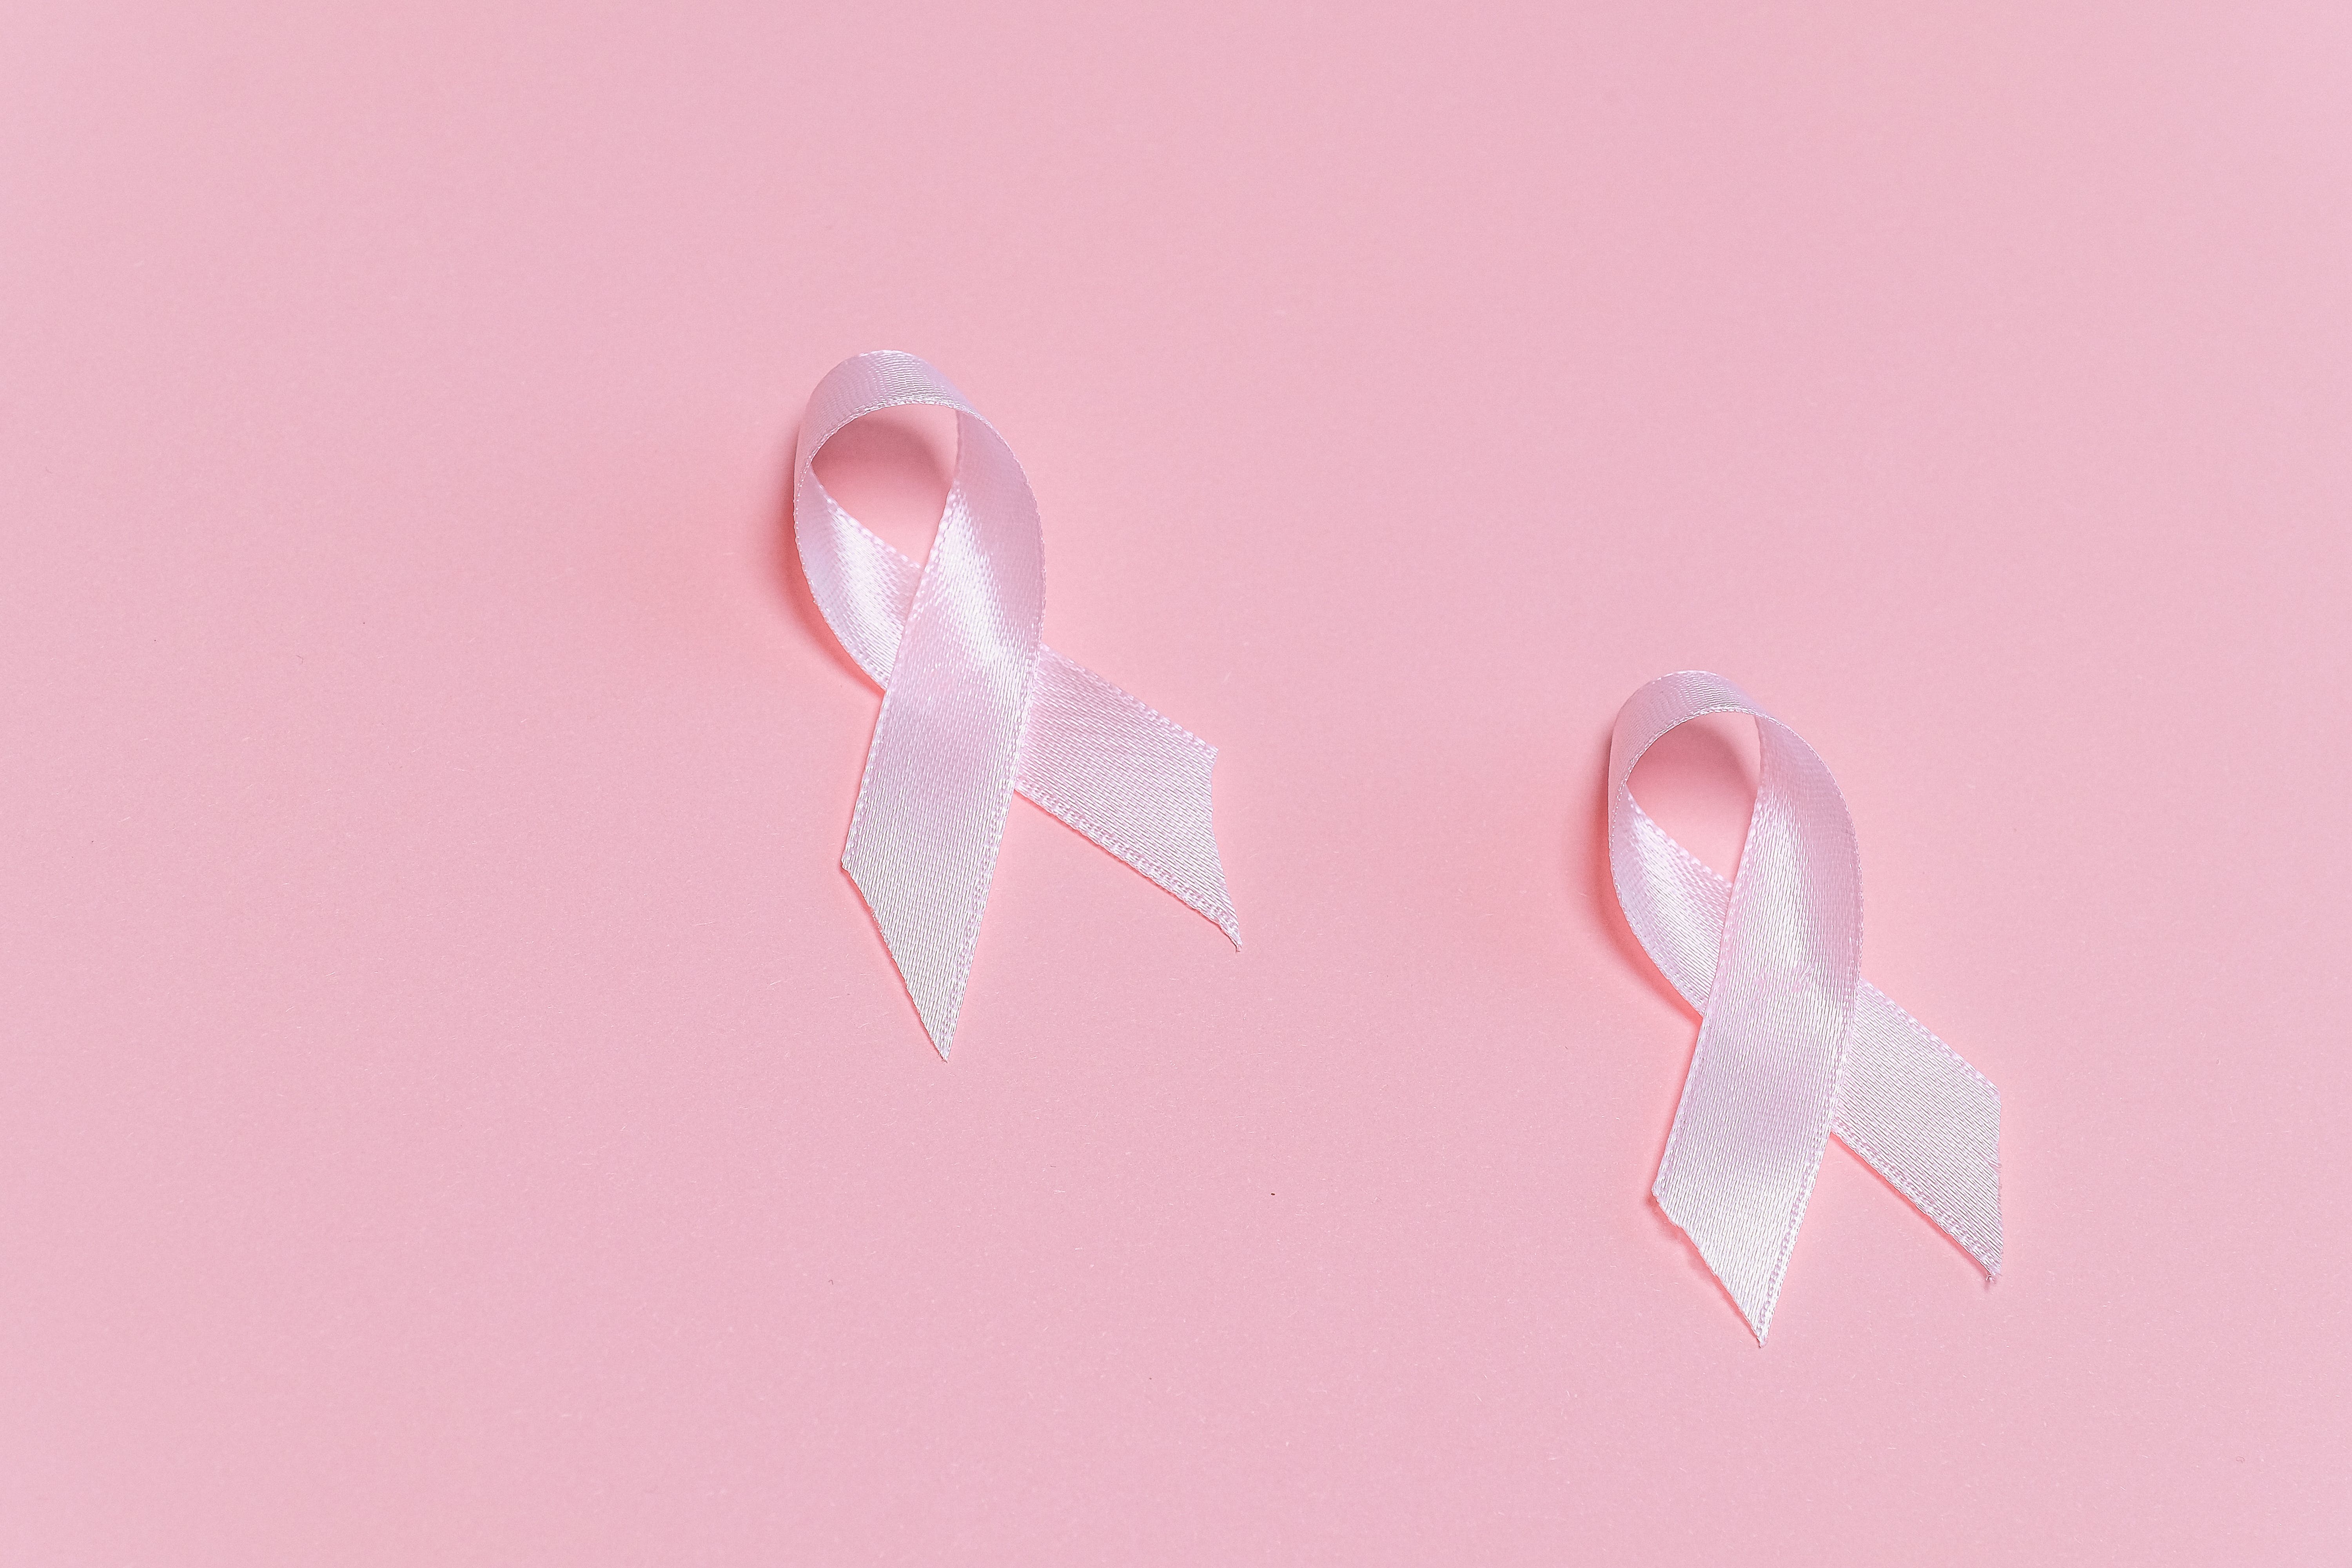 Cancer screening in women